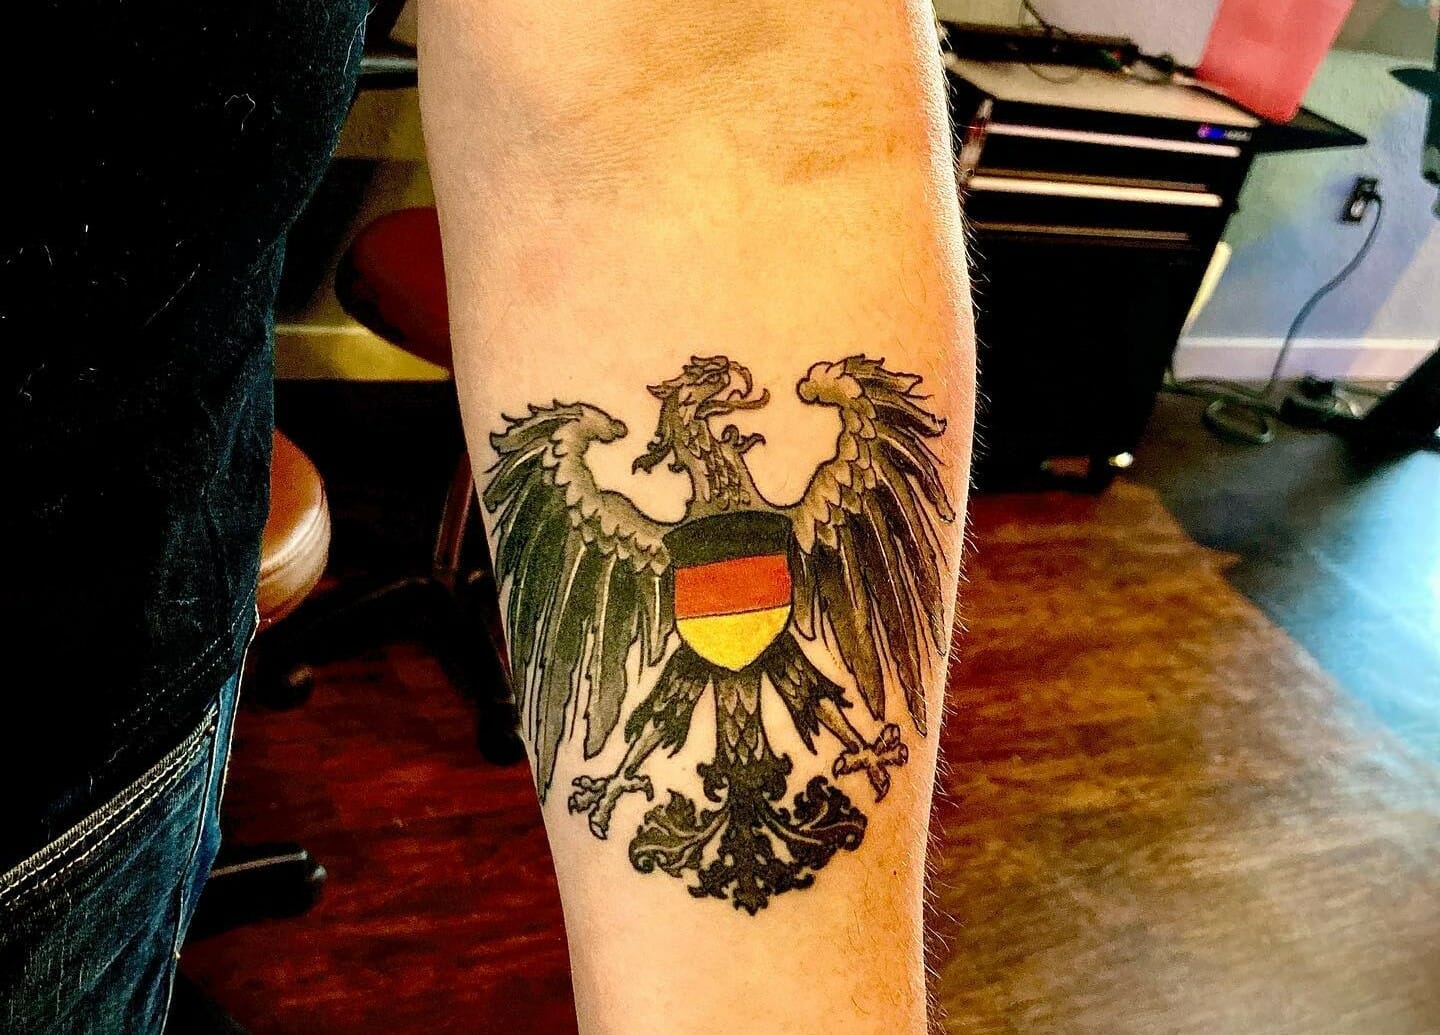 When is a German eagle a Nazi eagle